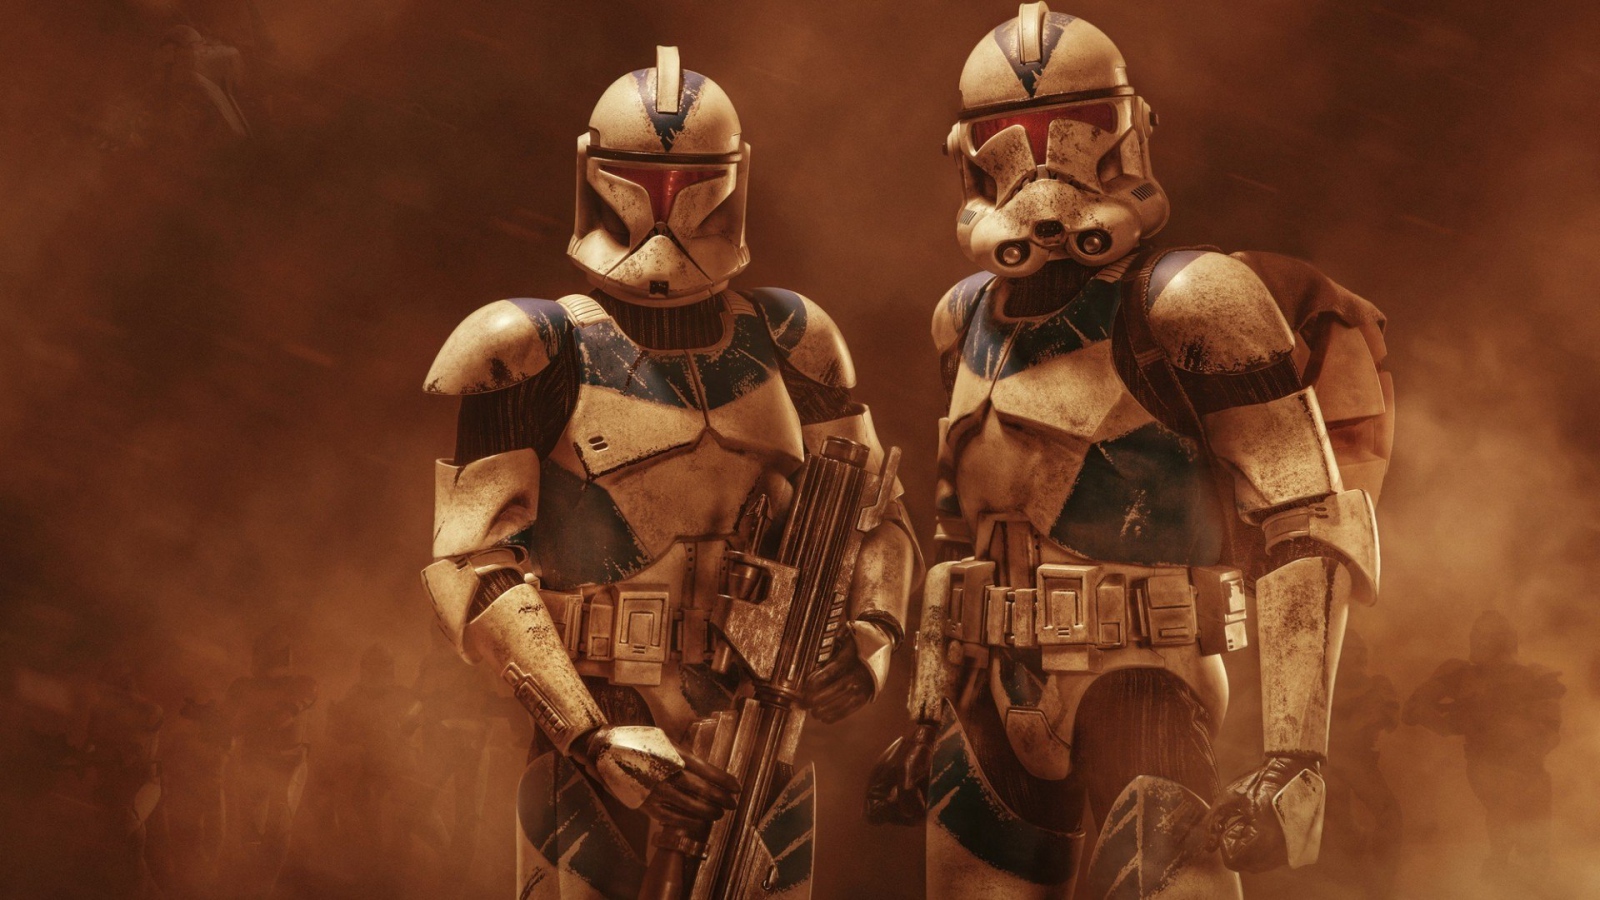 Imperial stormtroopers in Star Wars